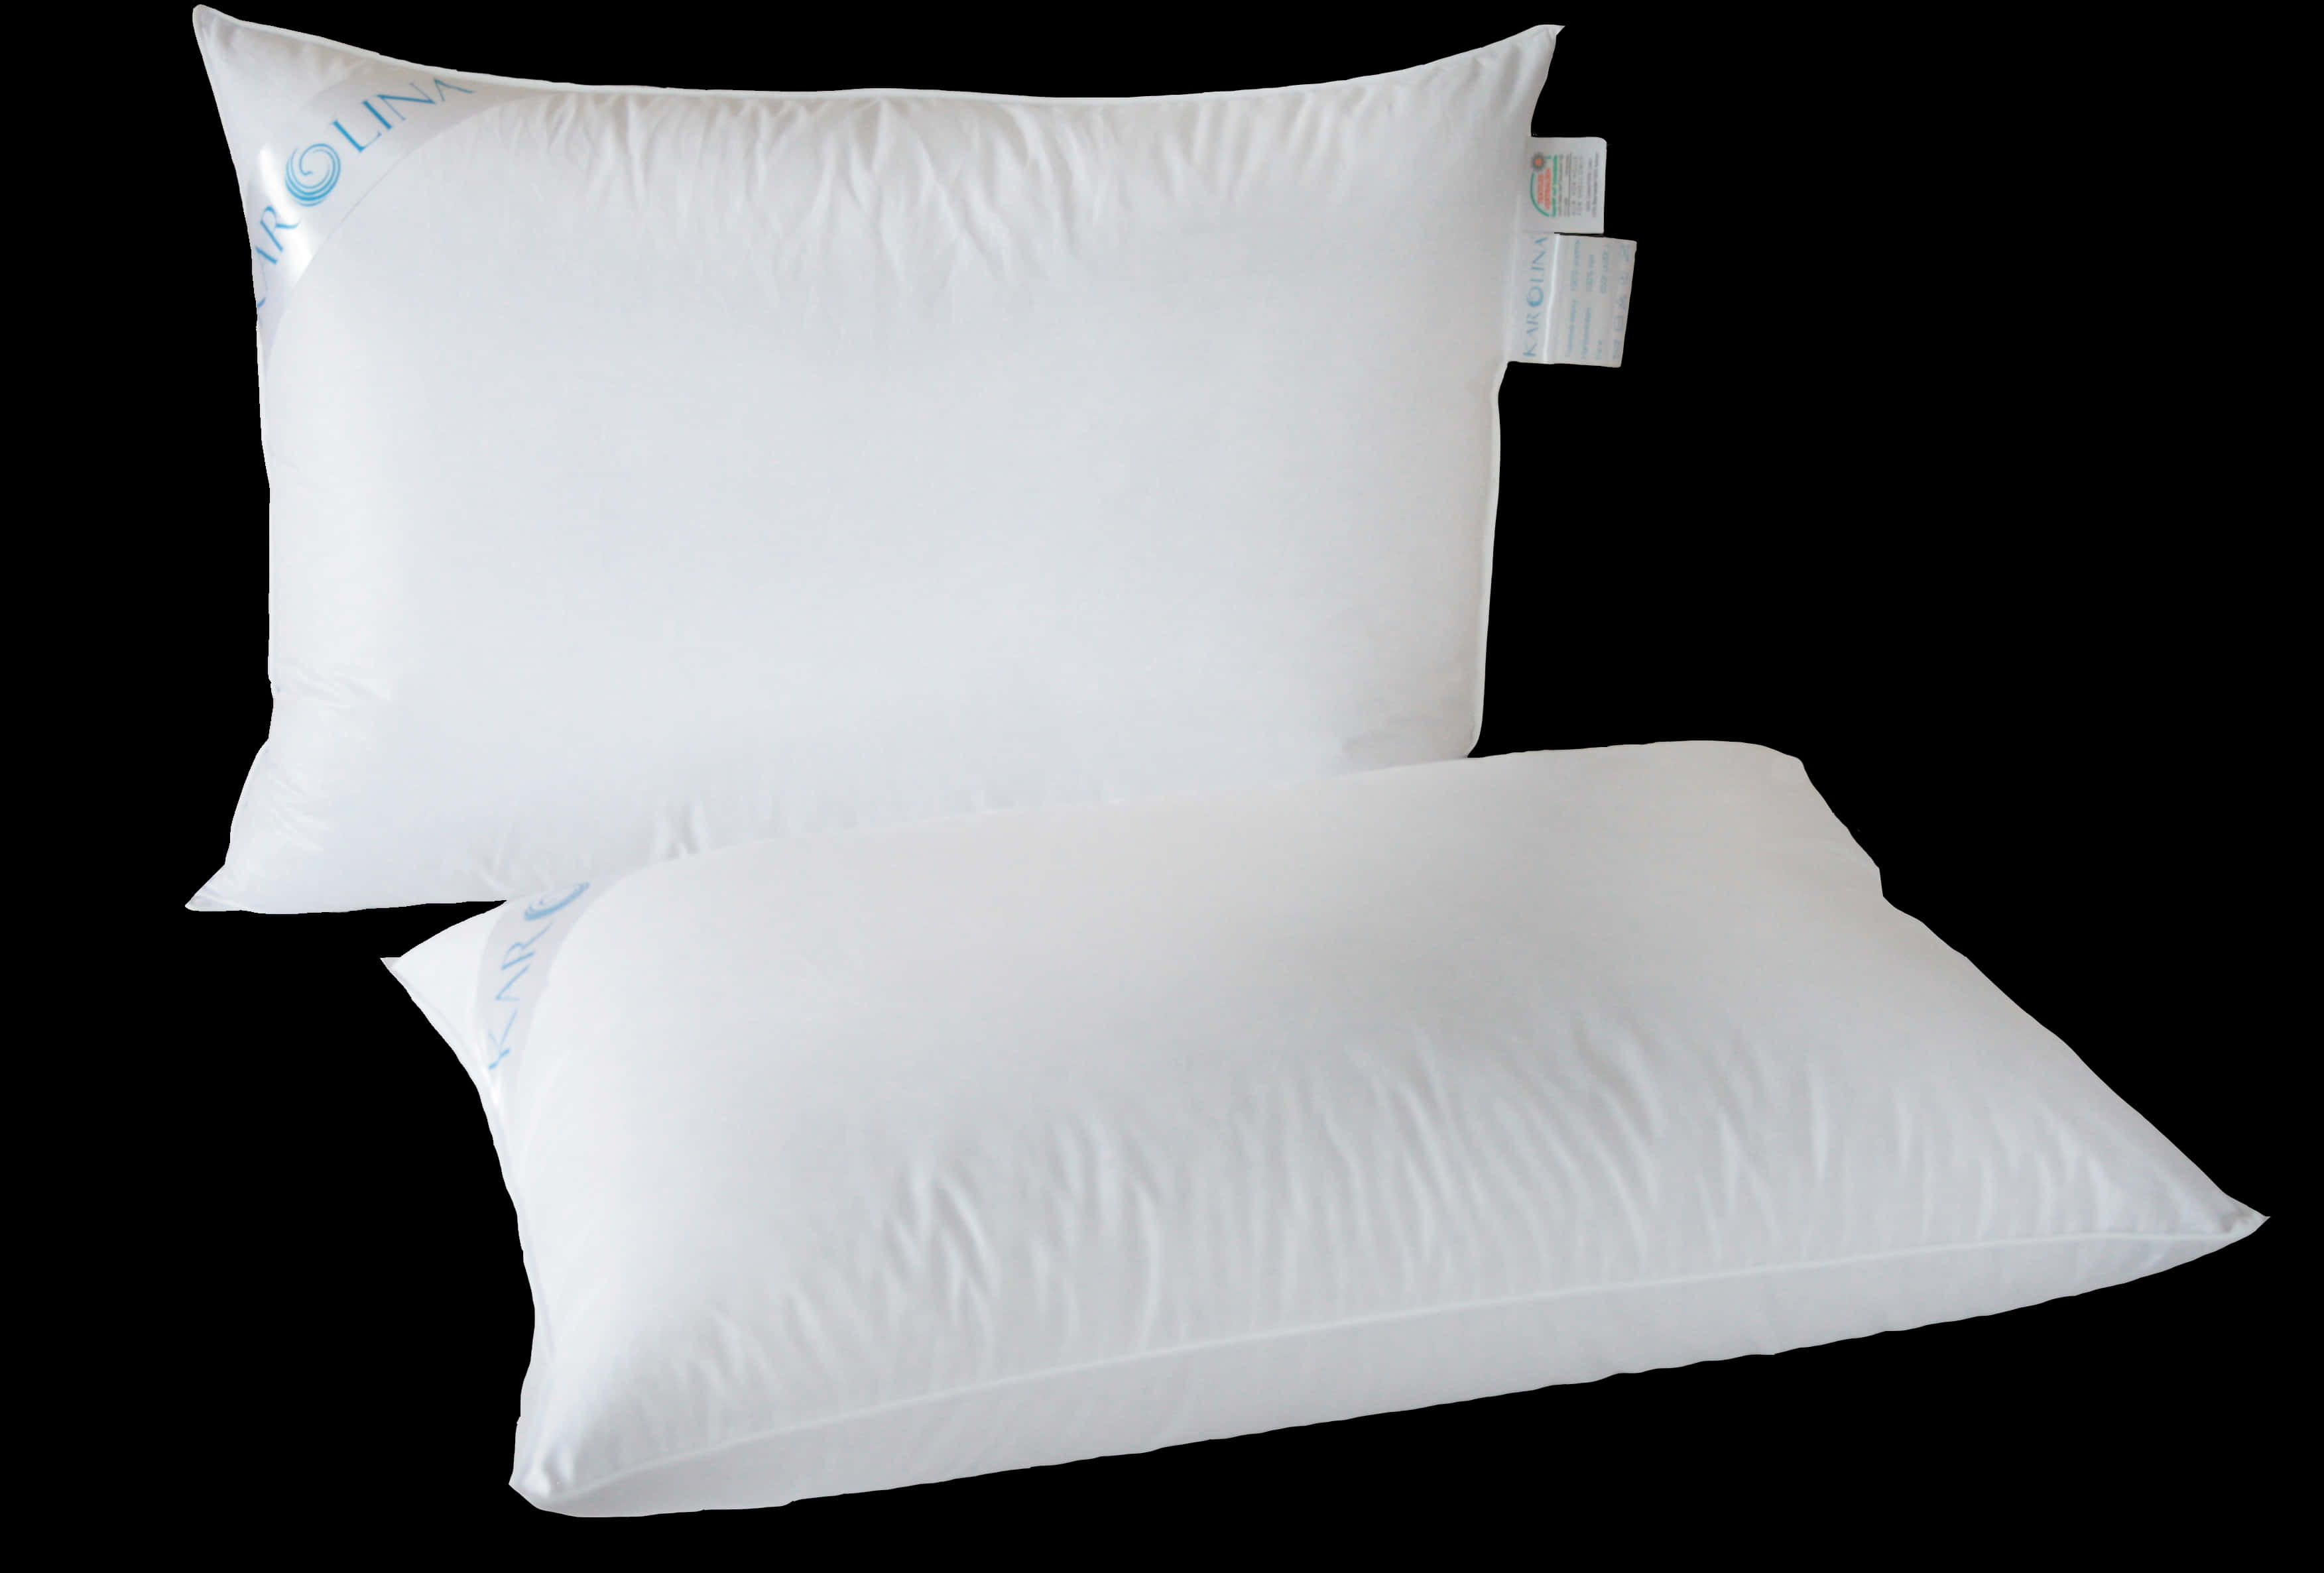 A Couple Of White Pillows